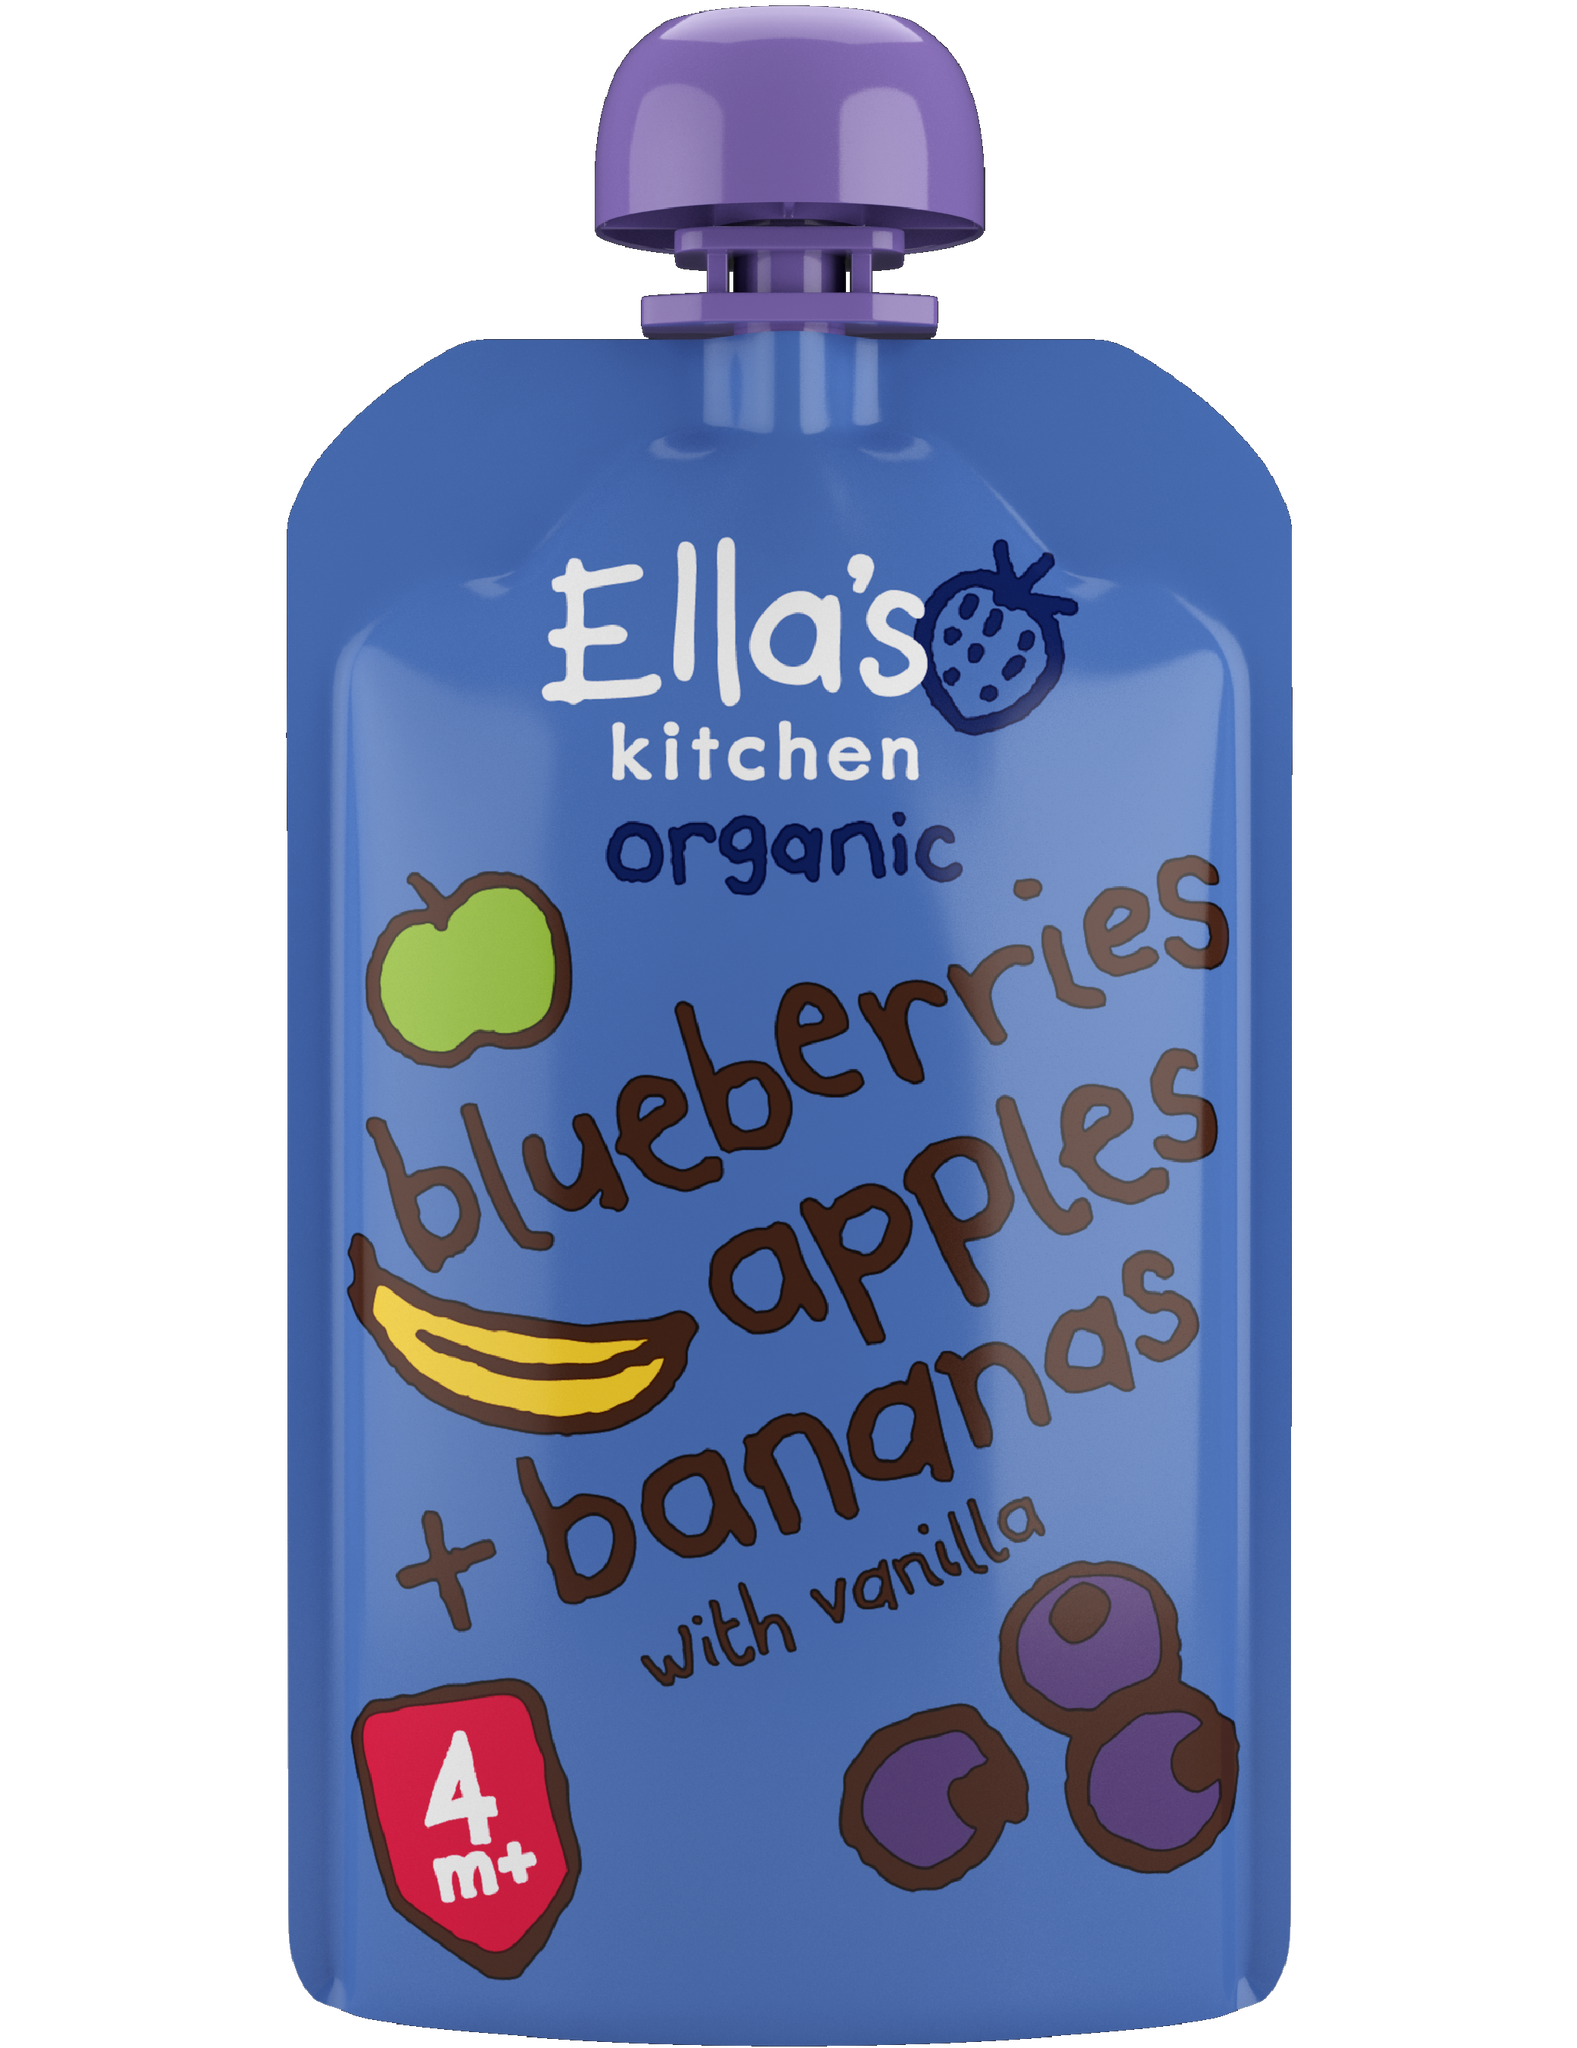 Blueberries apples bananas + vanilla